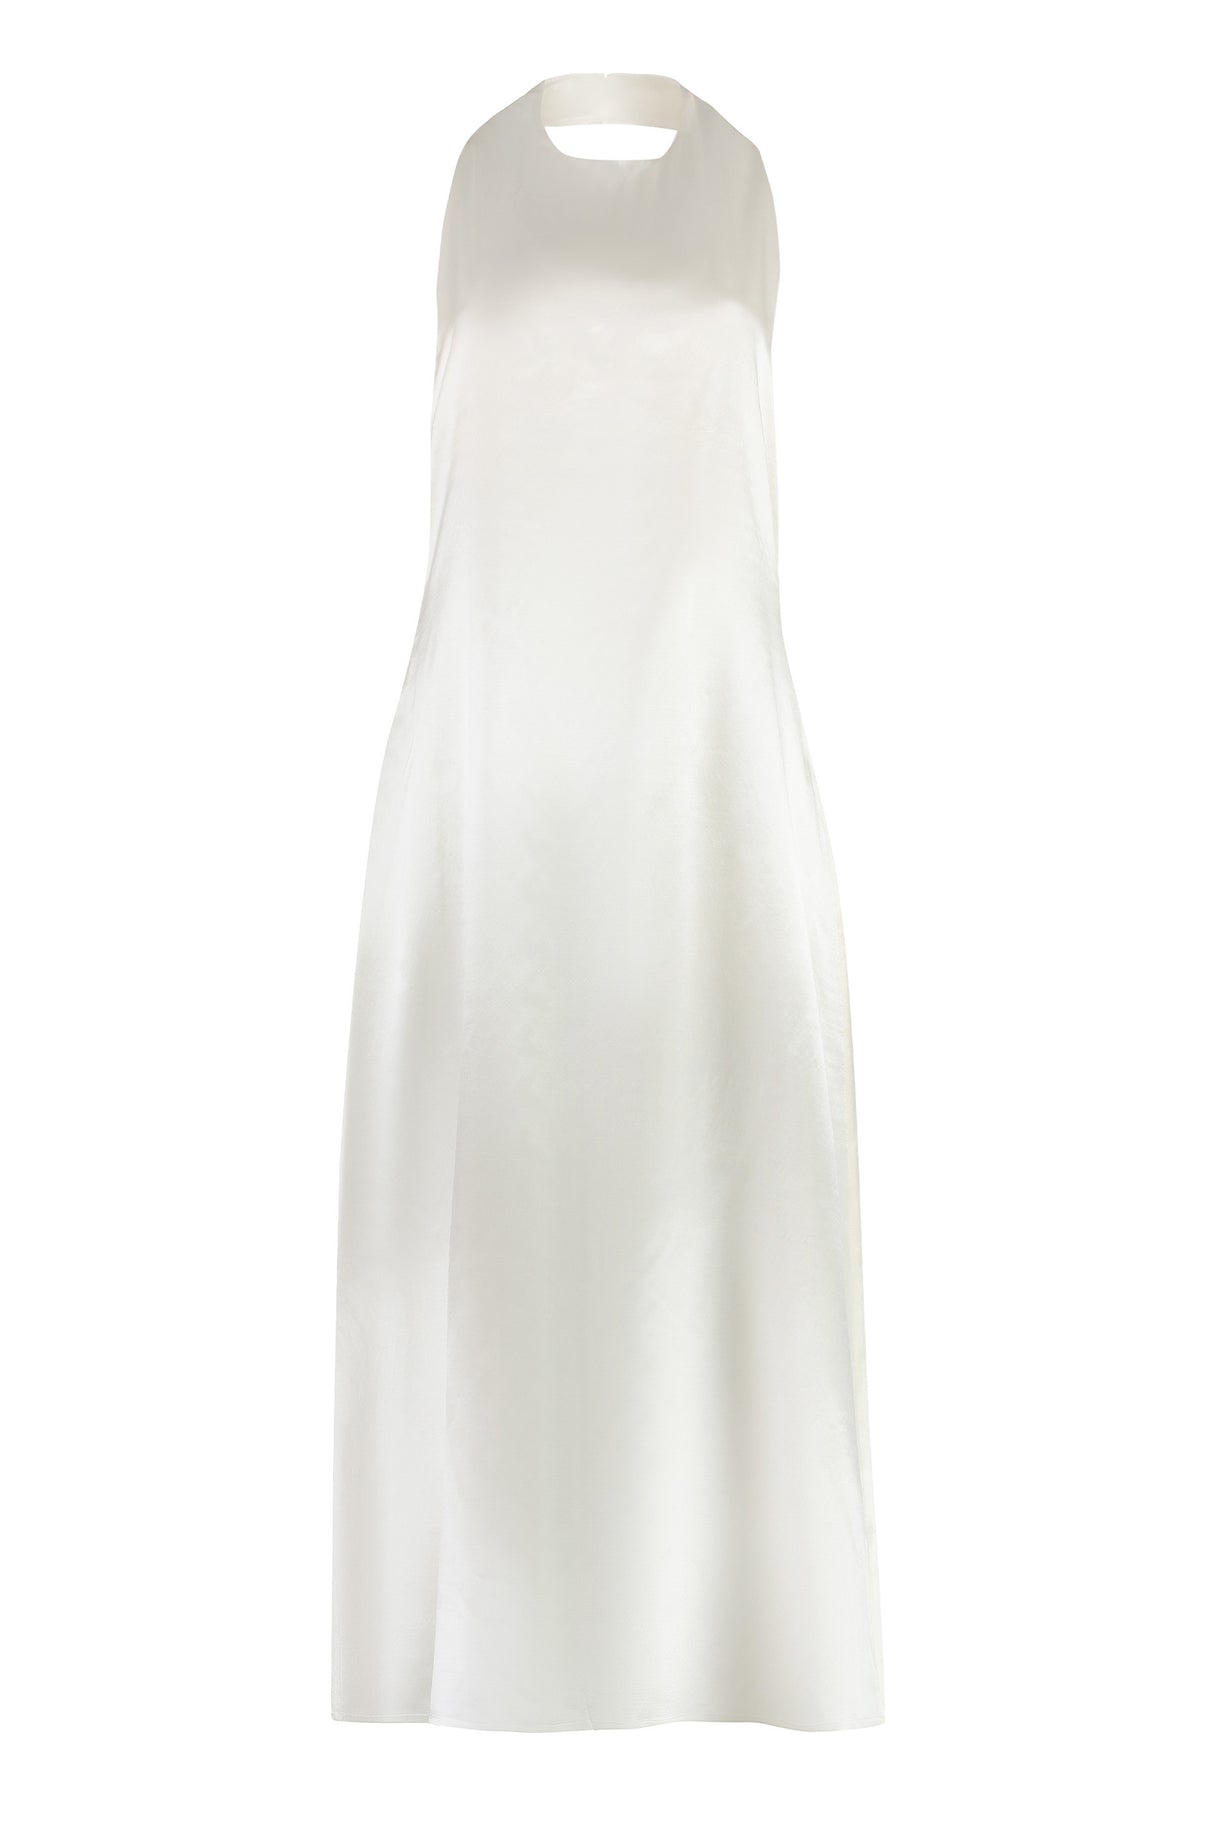 MAGDA BUTRYM Elegant Cream Wool-Blend Dress with Deep Back Neckline for Women